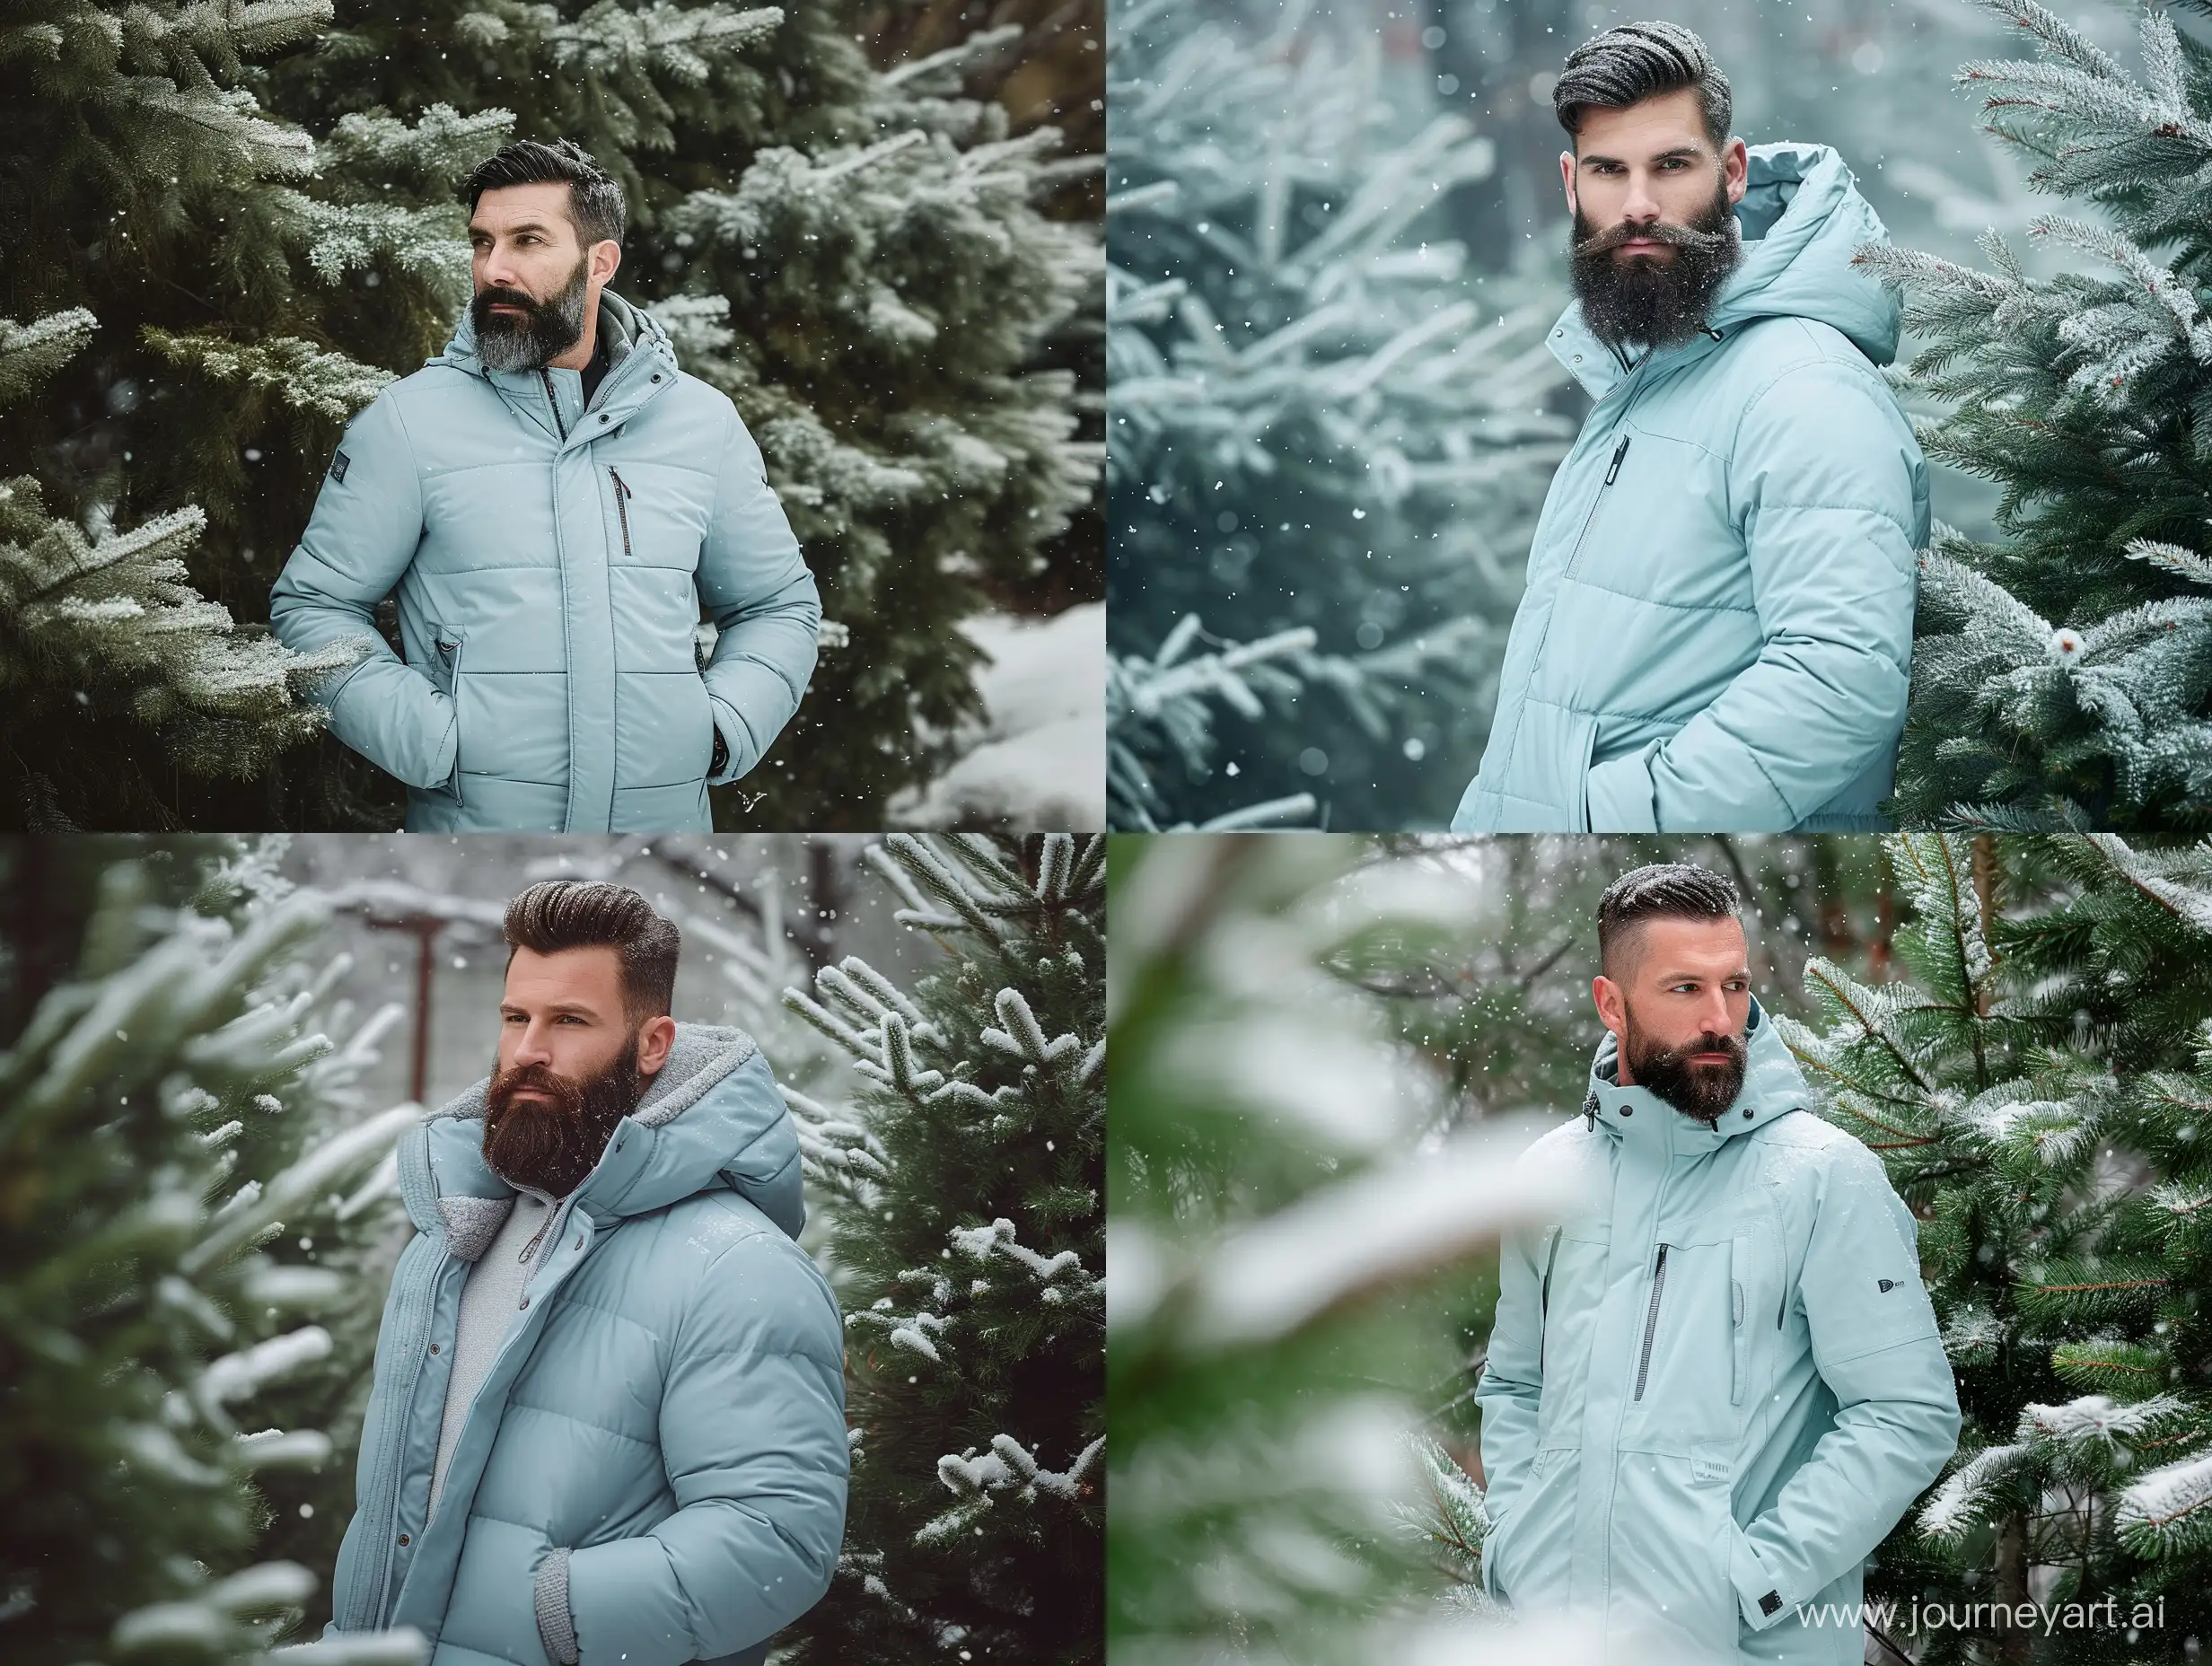 Stylish-Winter-Fashion-Real-Bearded-Man-in-Light-Blue-Jacket-Amidst-Snowy-Evergreens